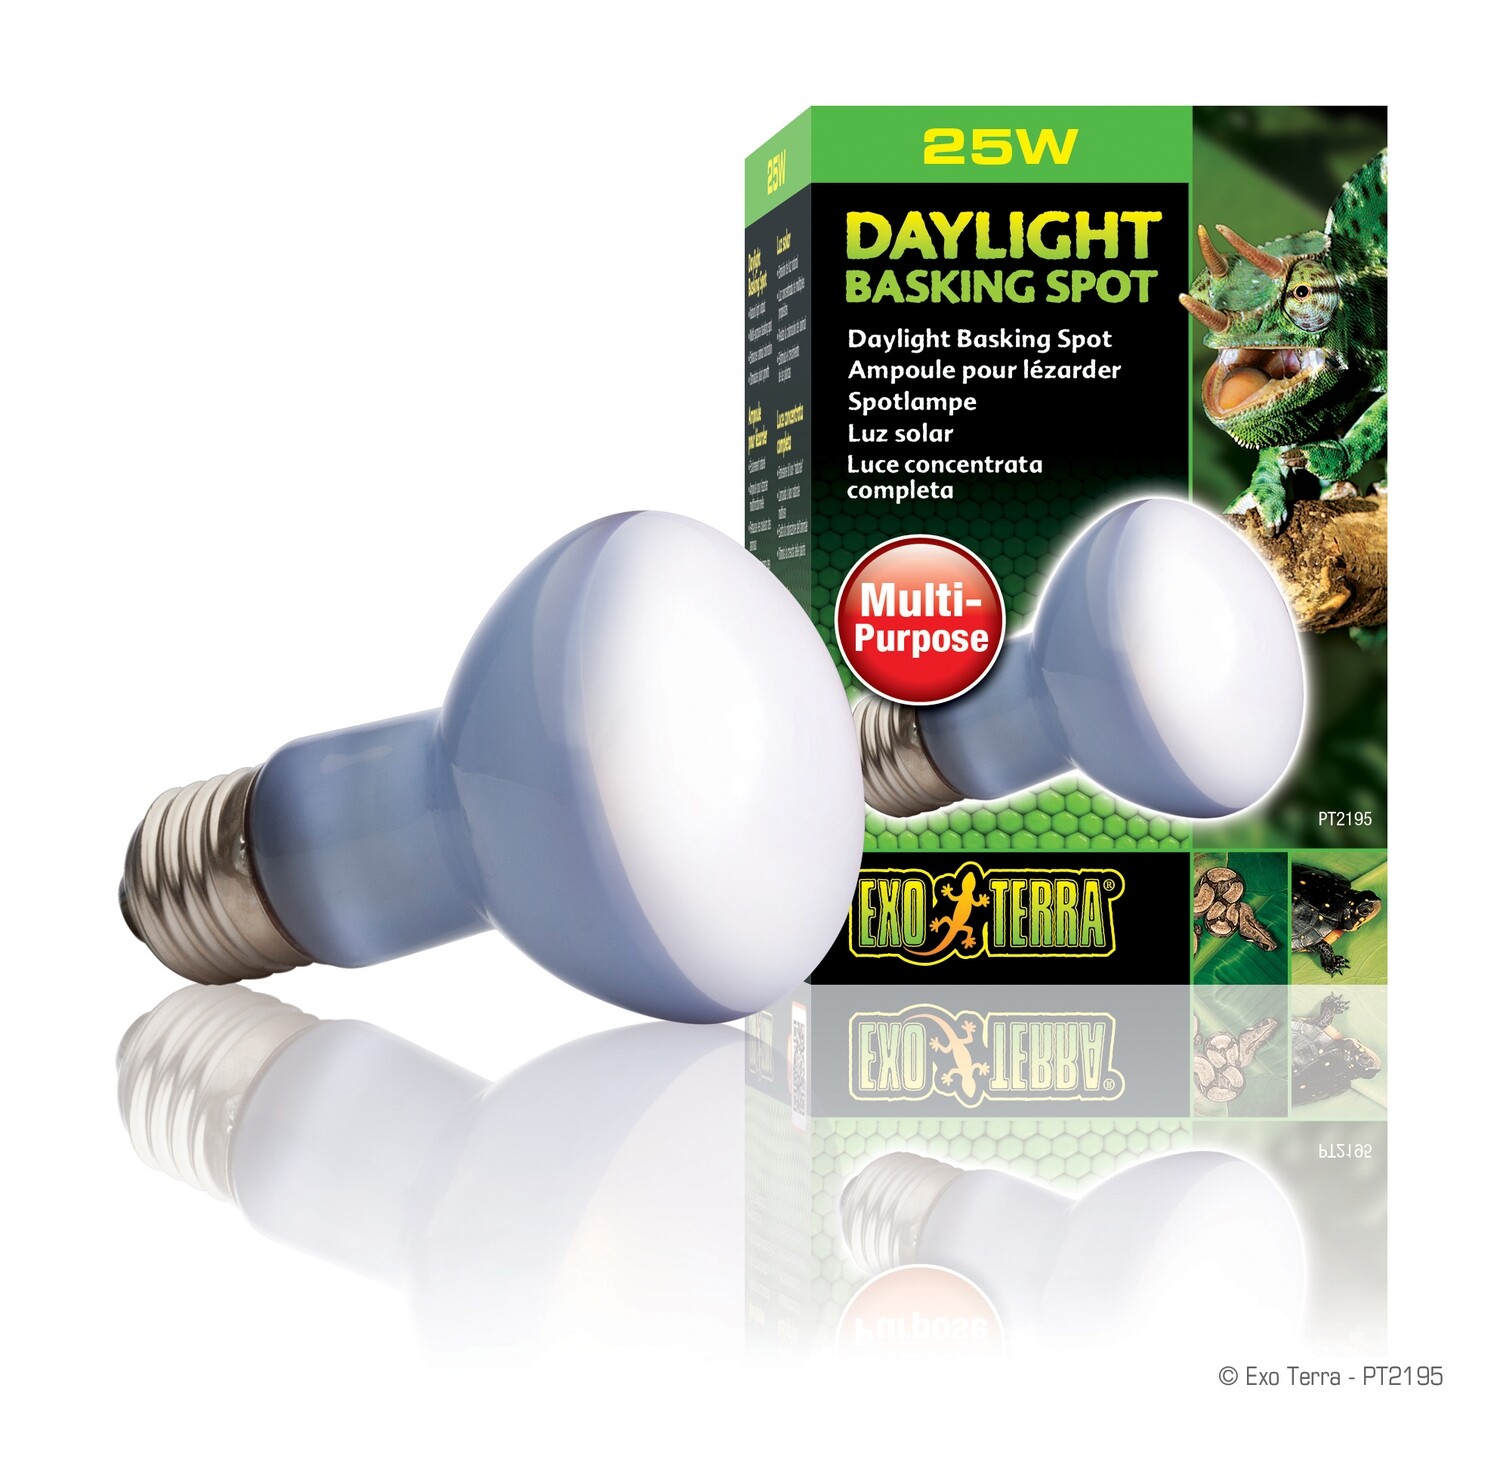 Exo Terra Daylight Basking Spot Lamp - 25W
